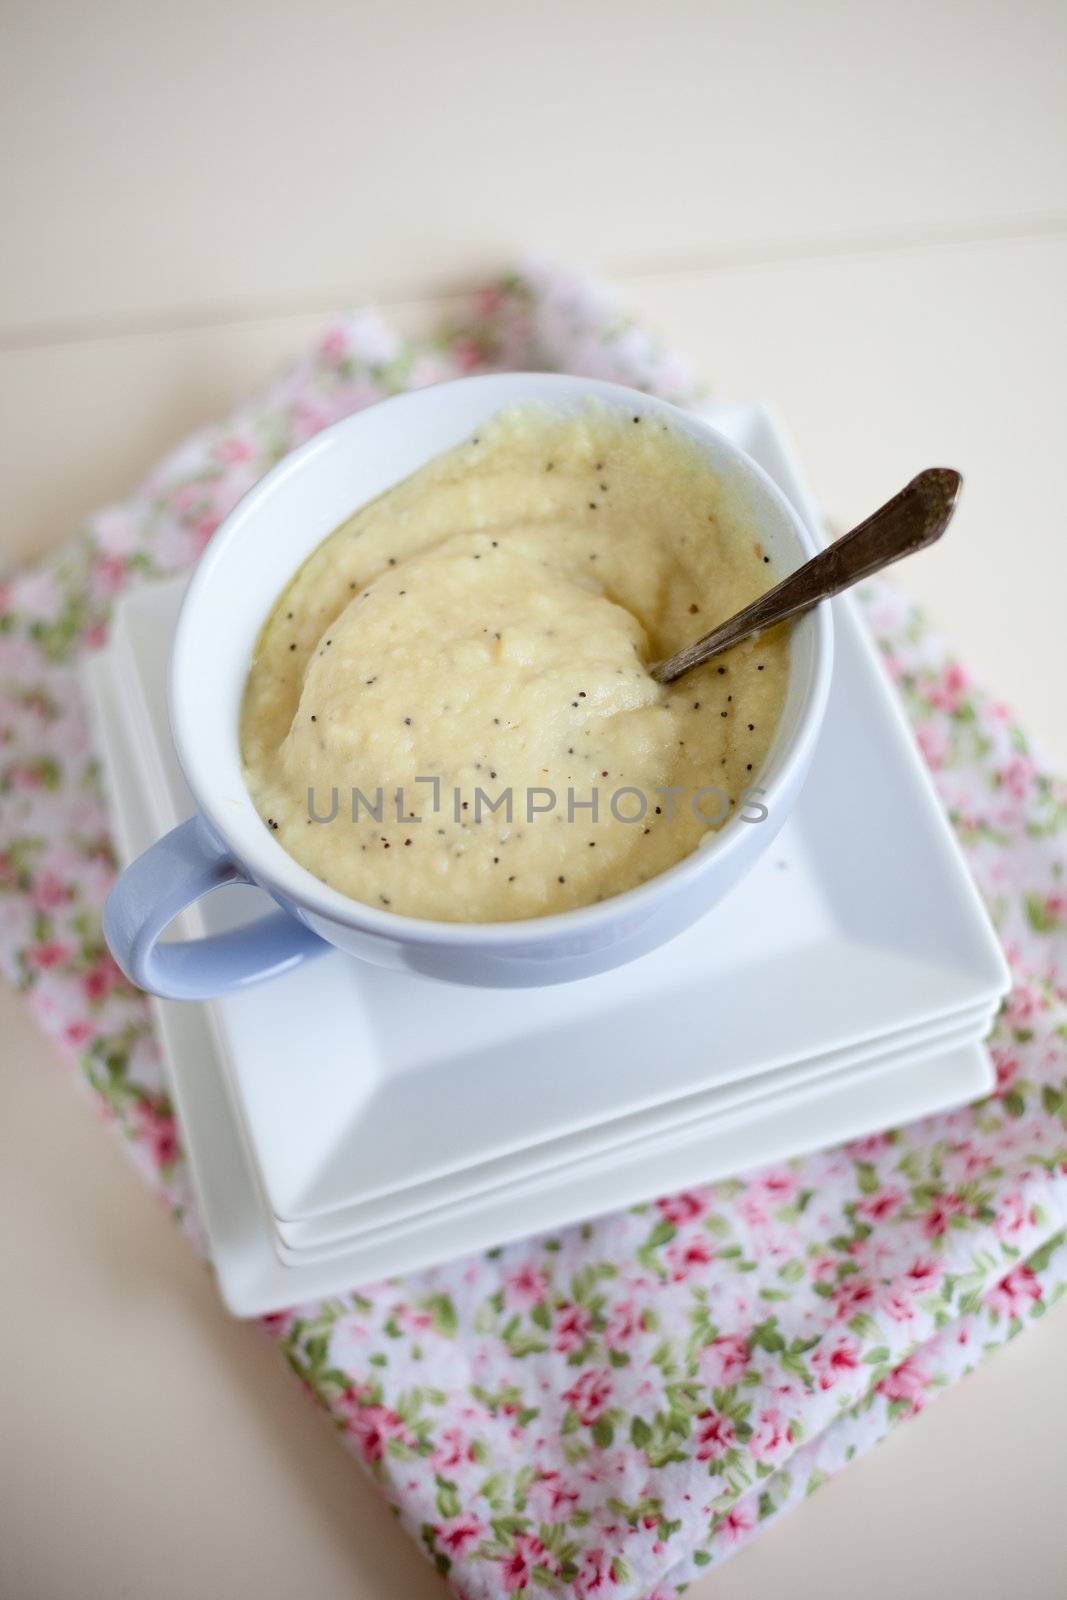 Apple celeriac soup by Fotosmurf